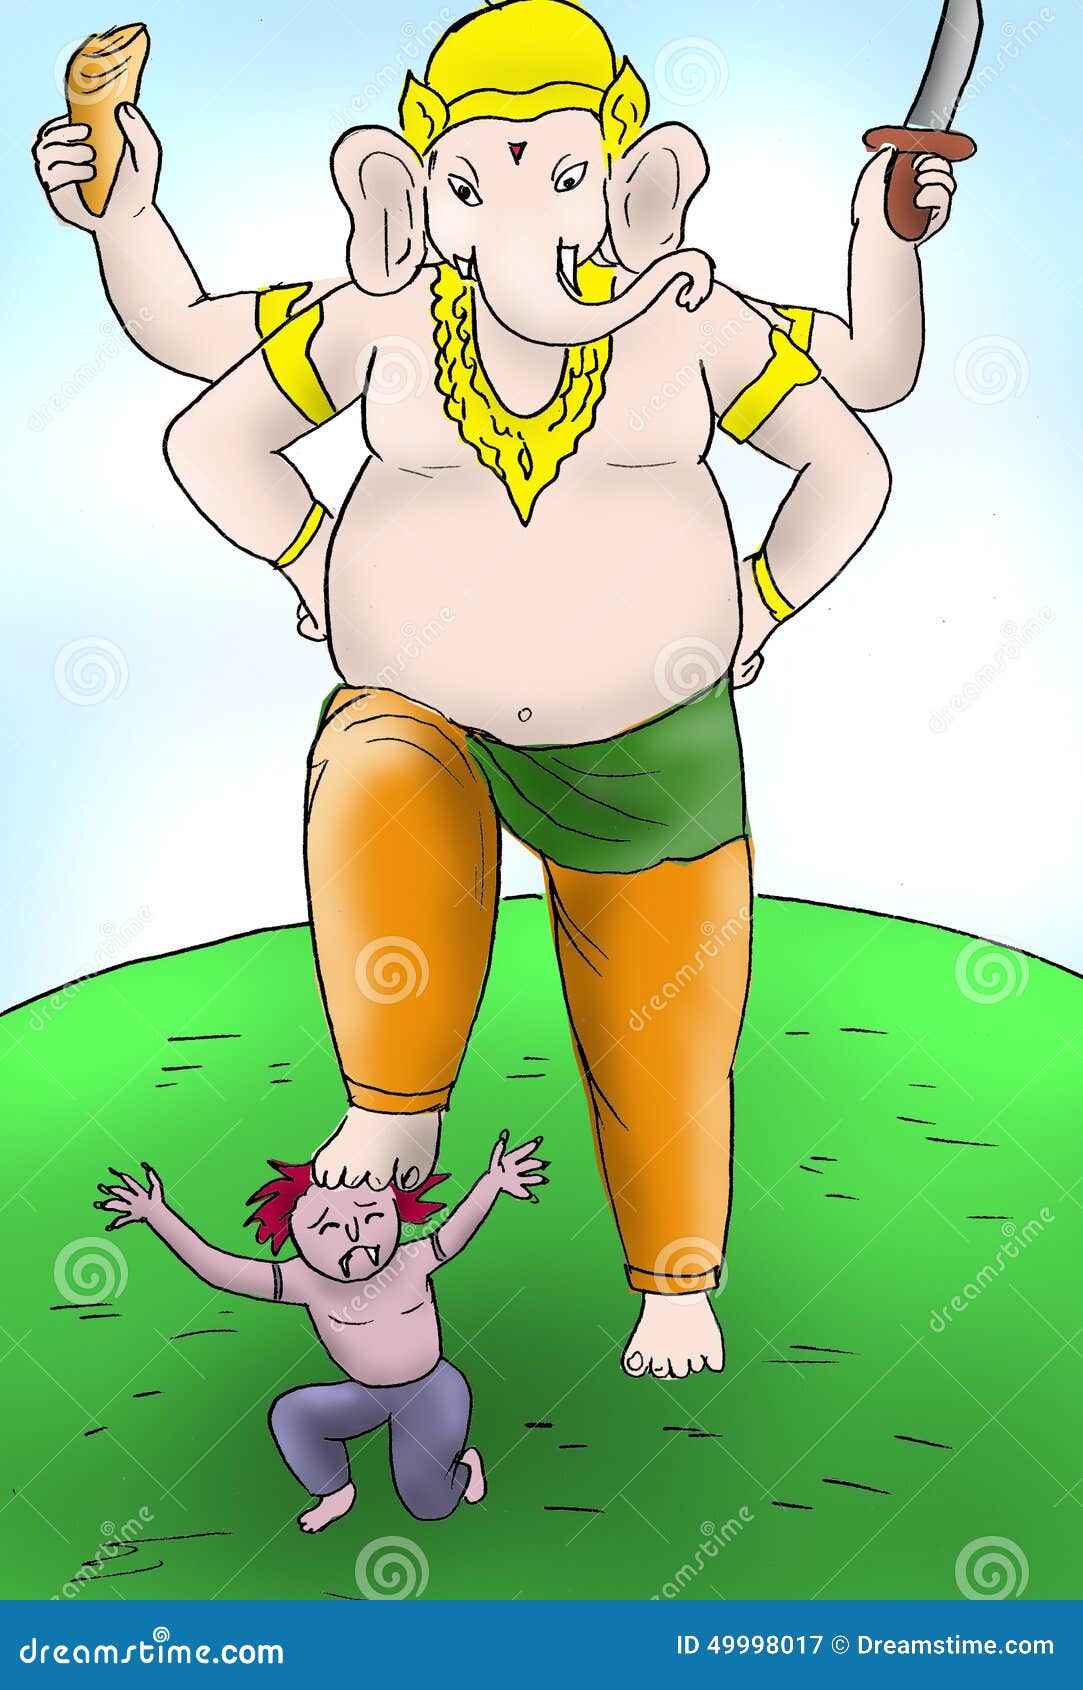 Ganesh stock illustration. Illustration of shiva, ganesh - 49998017